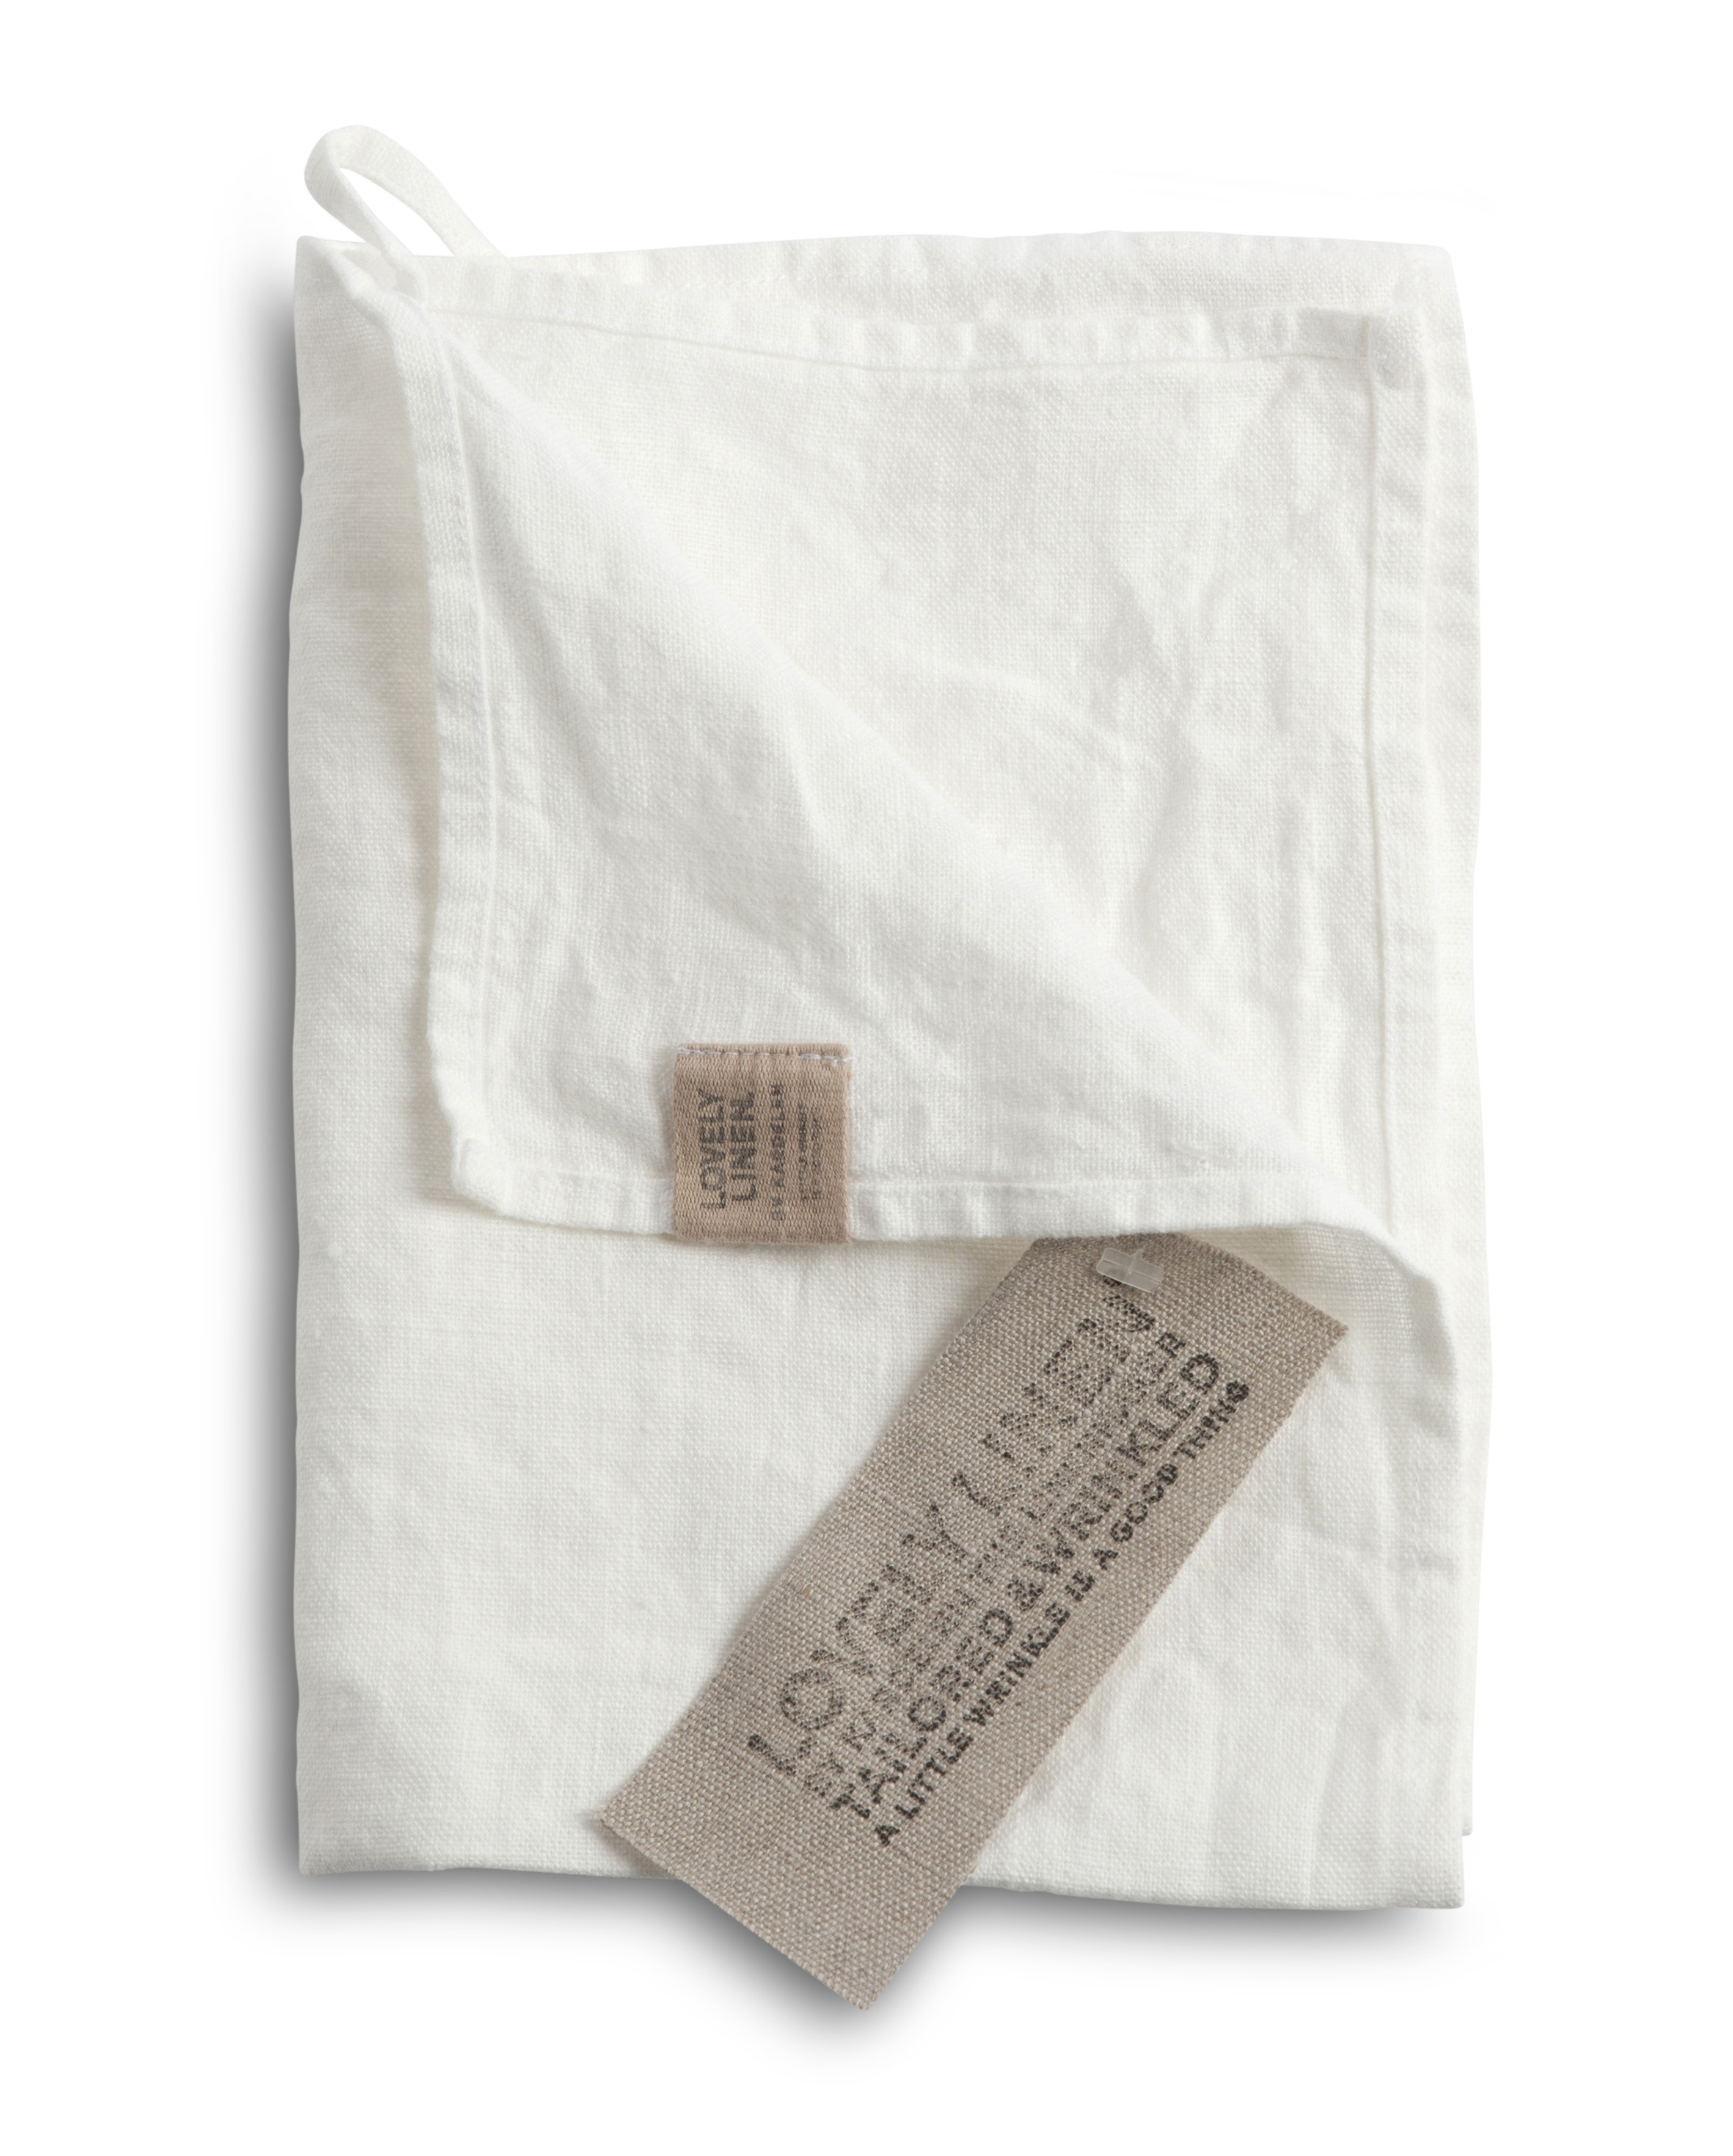 100% European Linen Hamman Towel in Off White